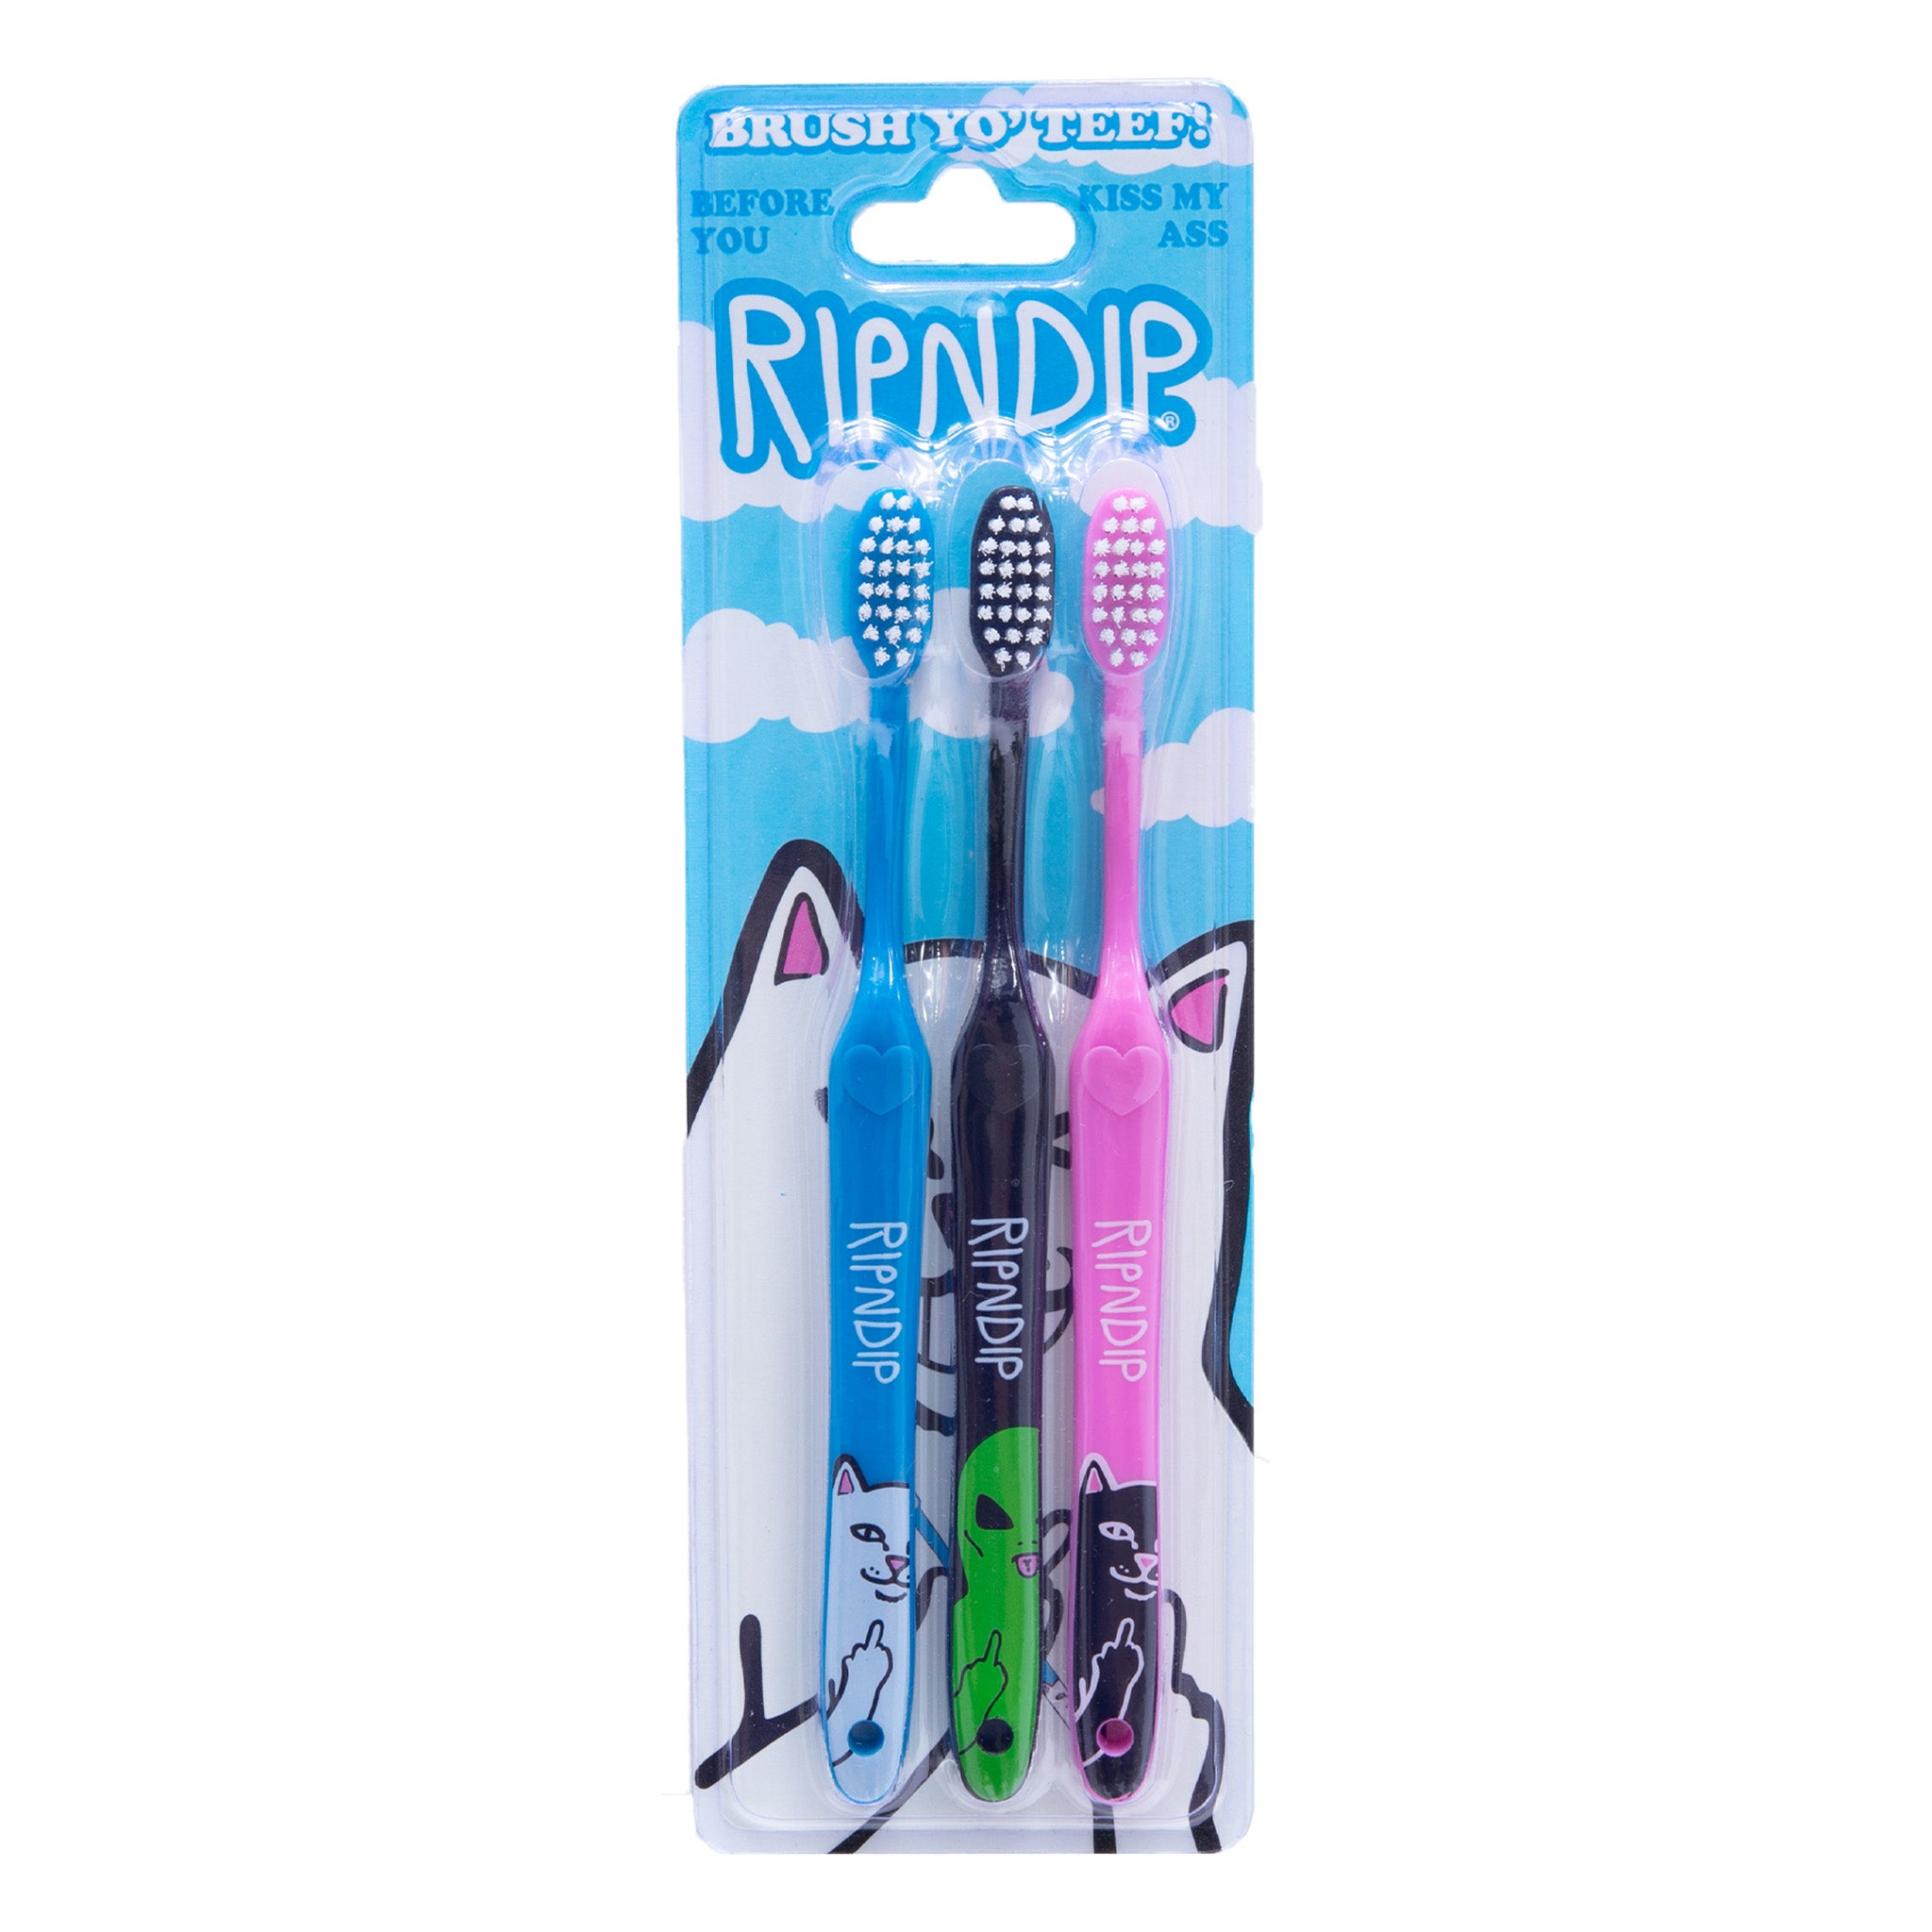 RIPNDIP Characters Toothbrush 3 Pack (Multi)